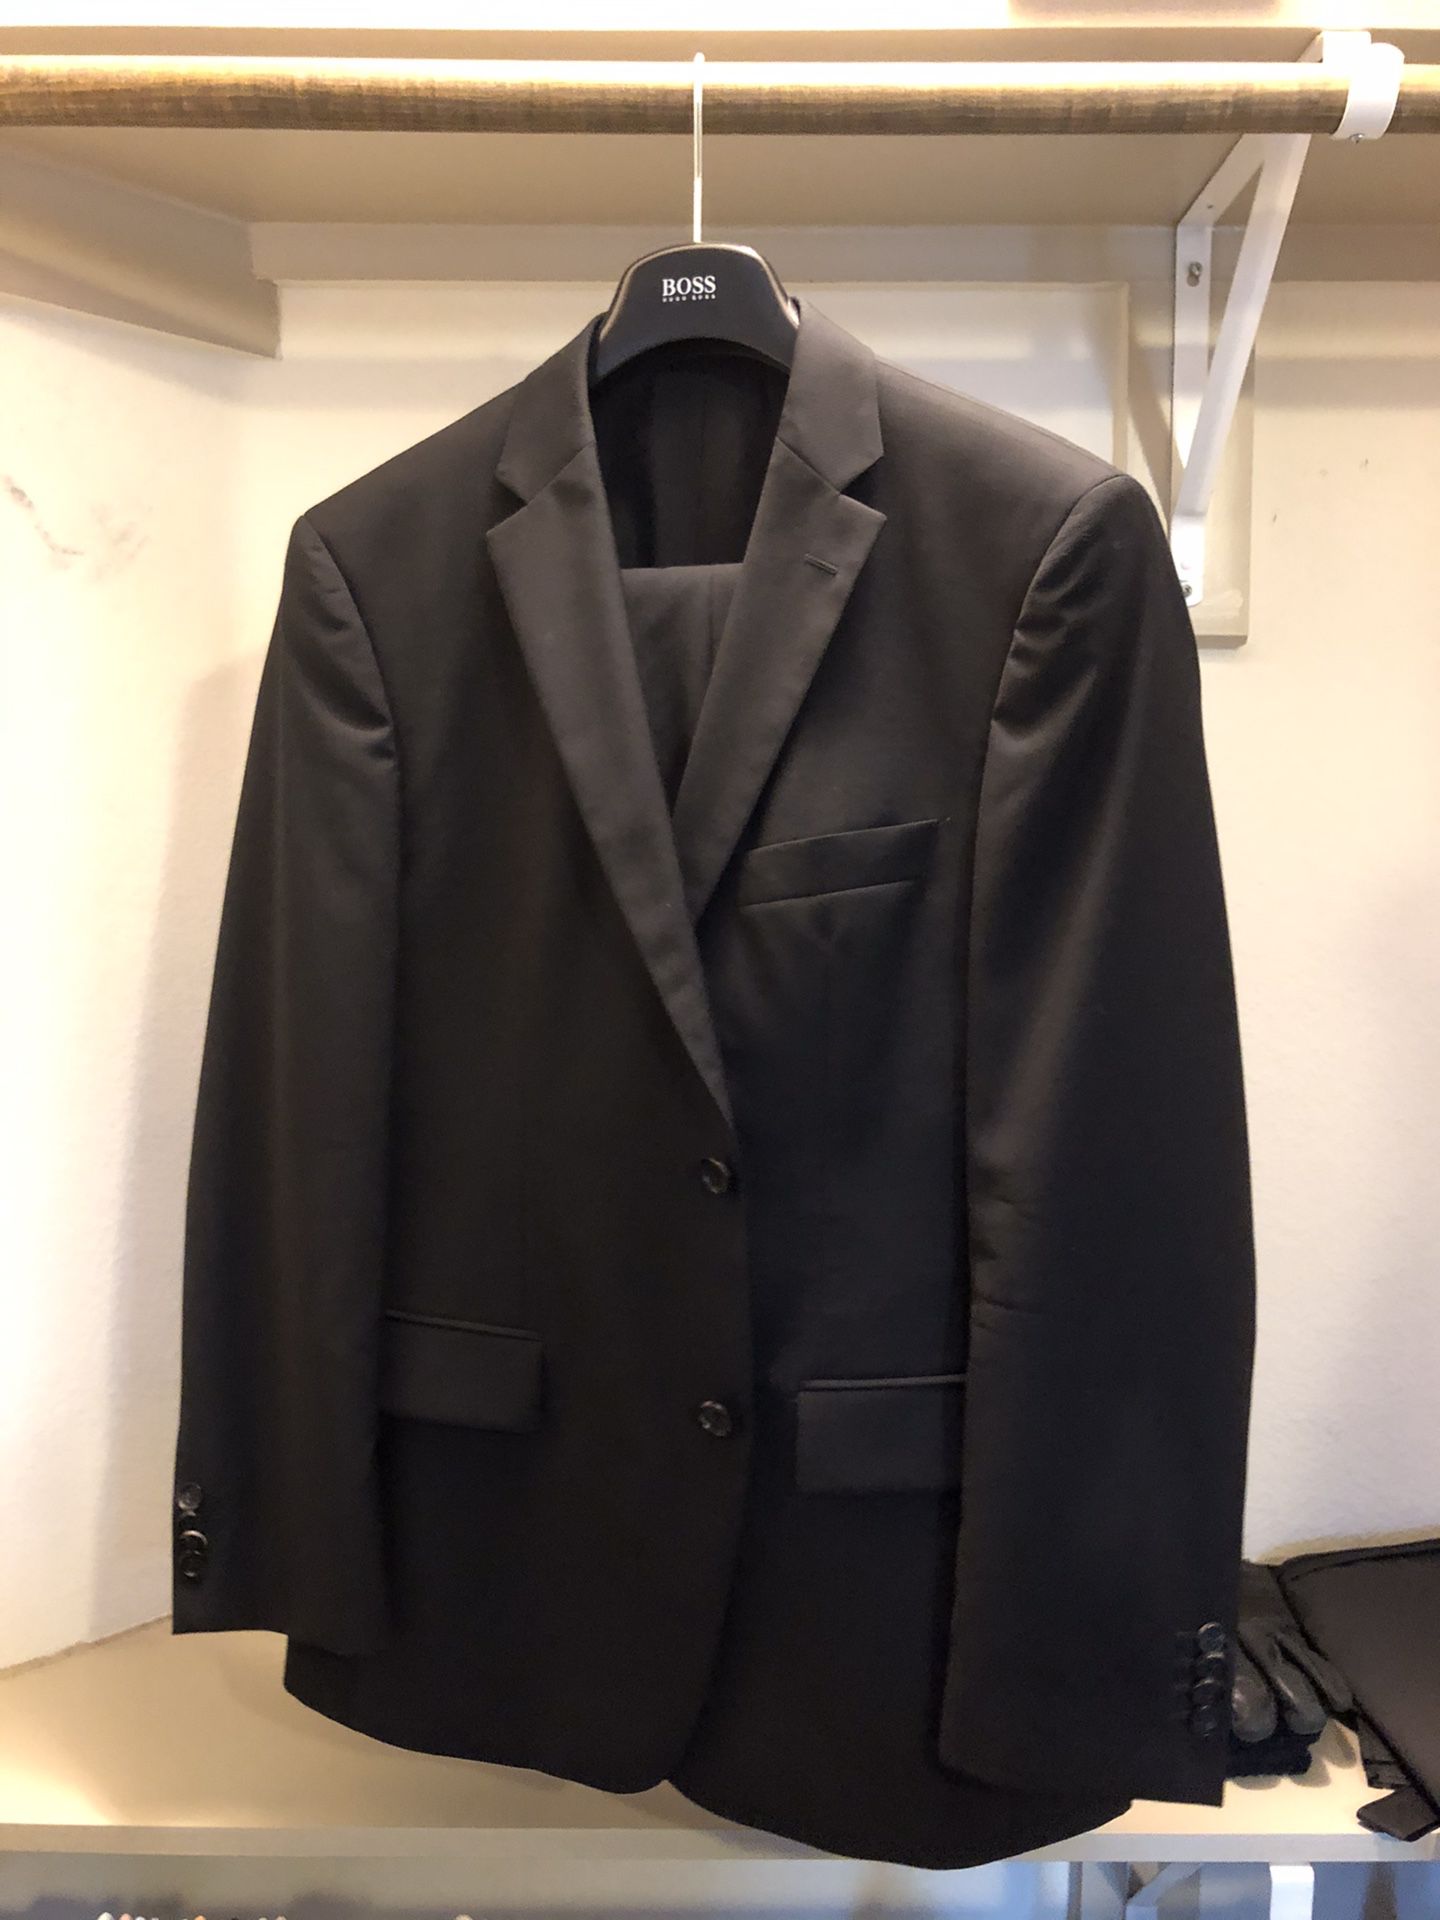 Hugo Boss Men’s Black Suit - 40S Jacket, 34x30 Pants